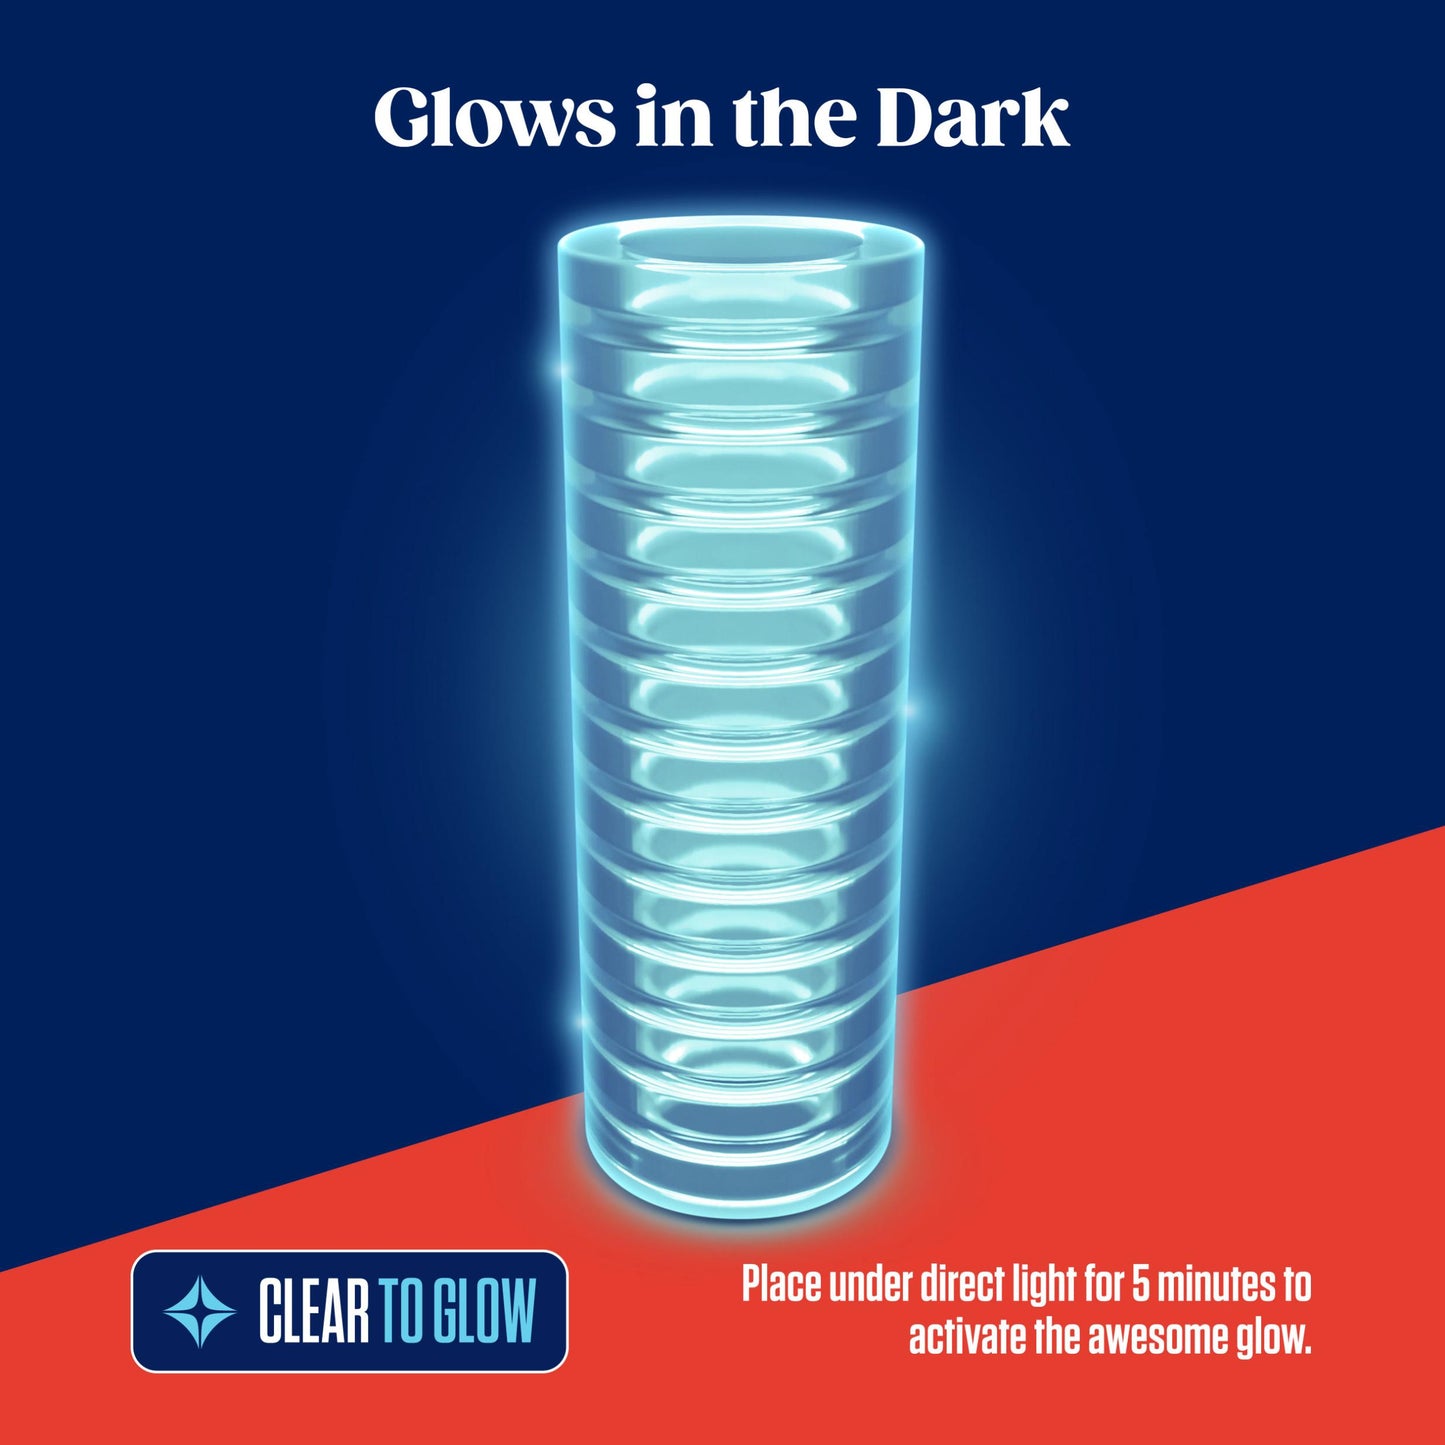 Rize - - Glow in the Dark - Lubricating Stroker - Clear